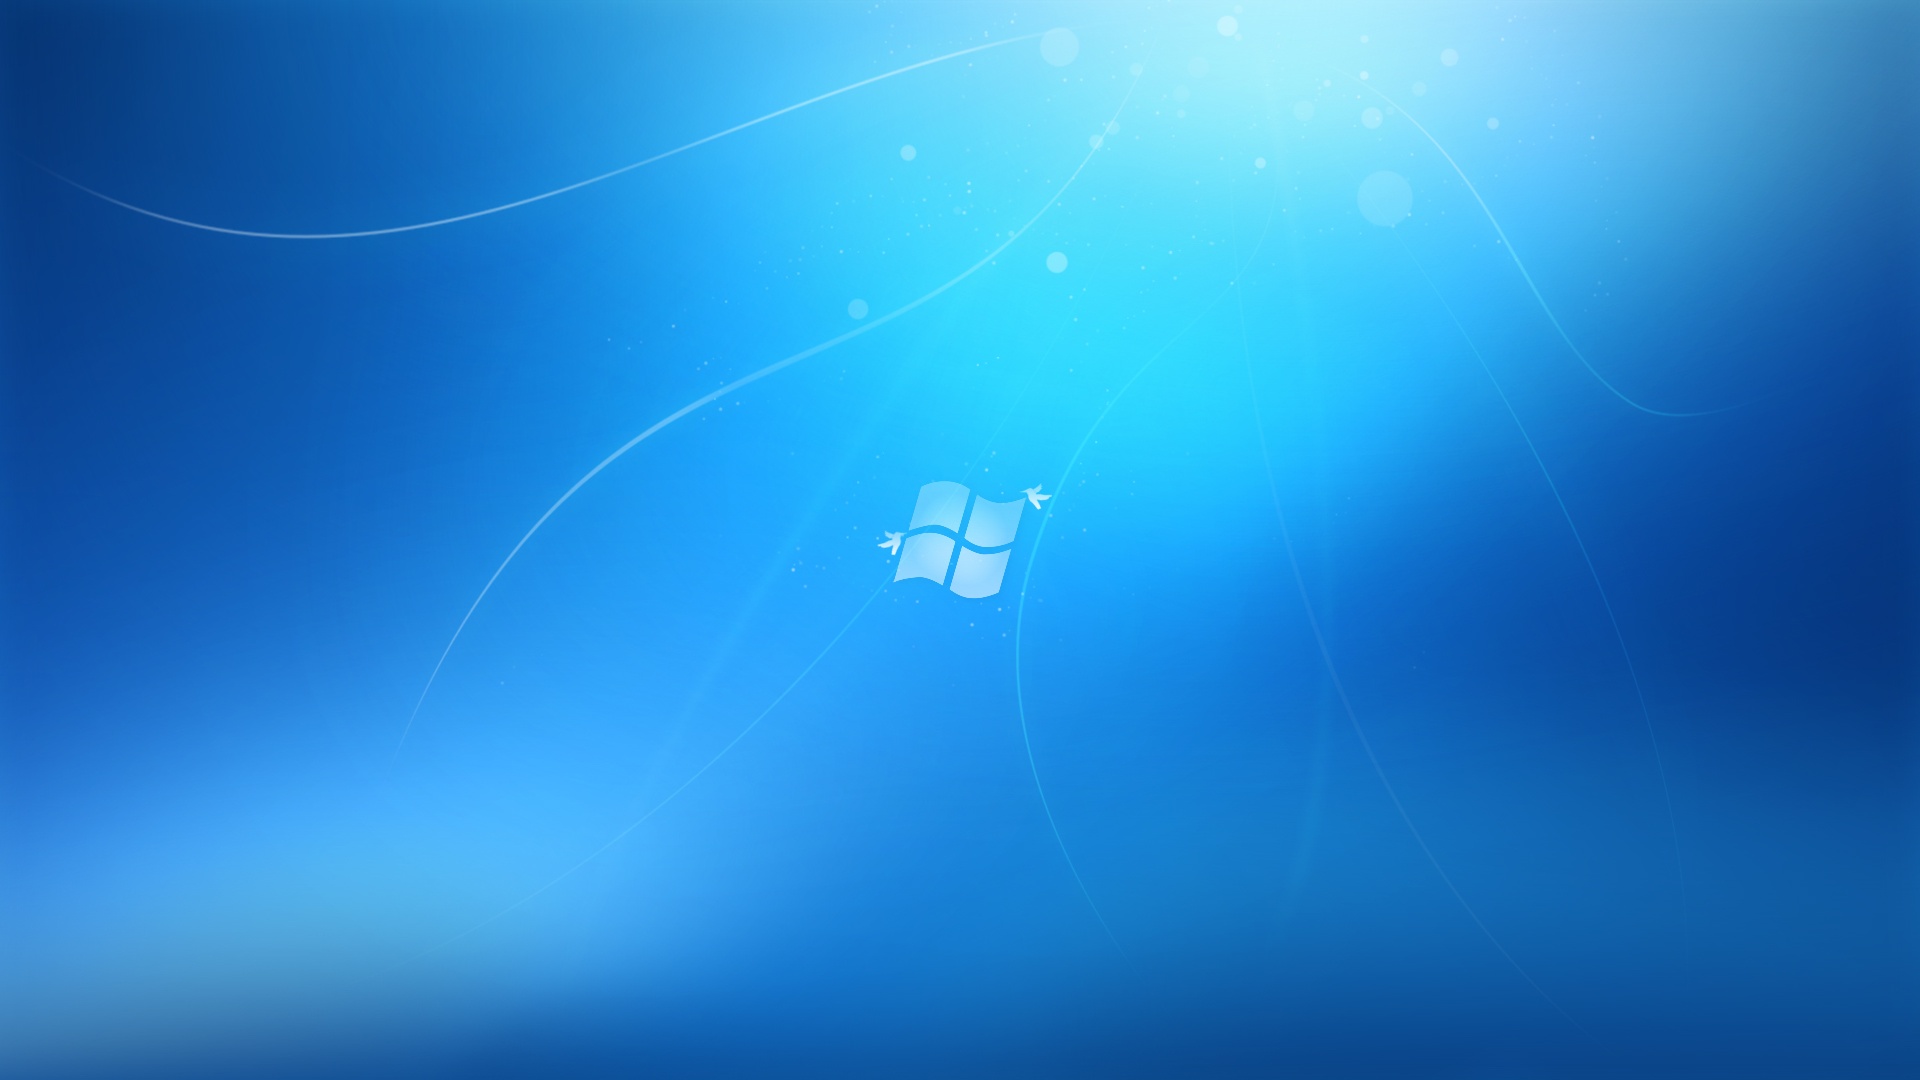 Windows 7 Blue 1080p HD Wallpapers HD Wallpapers